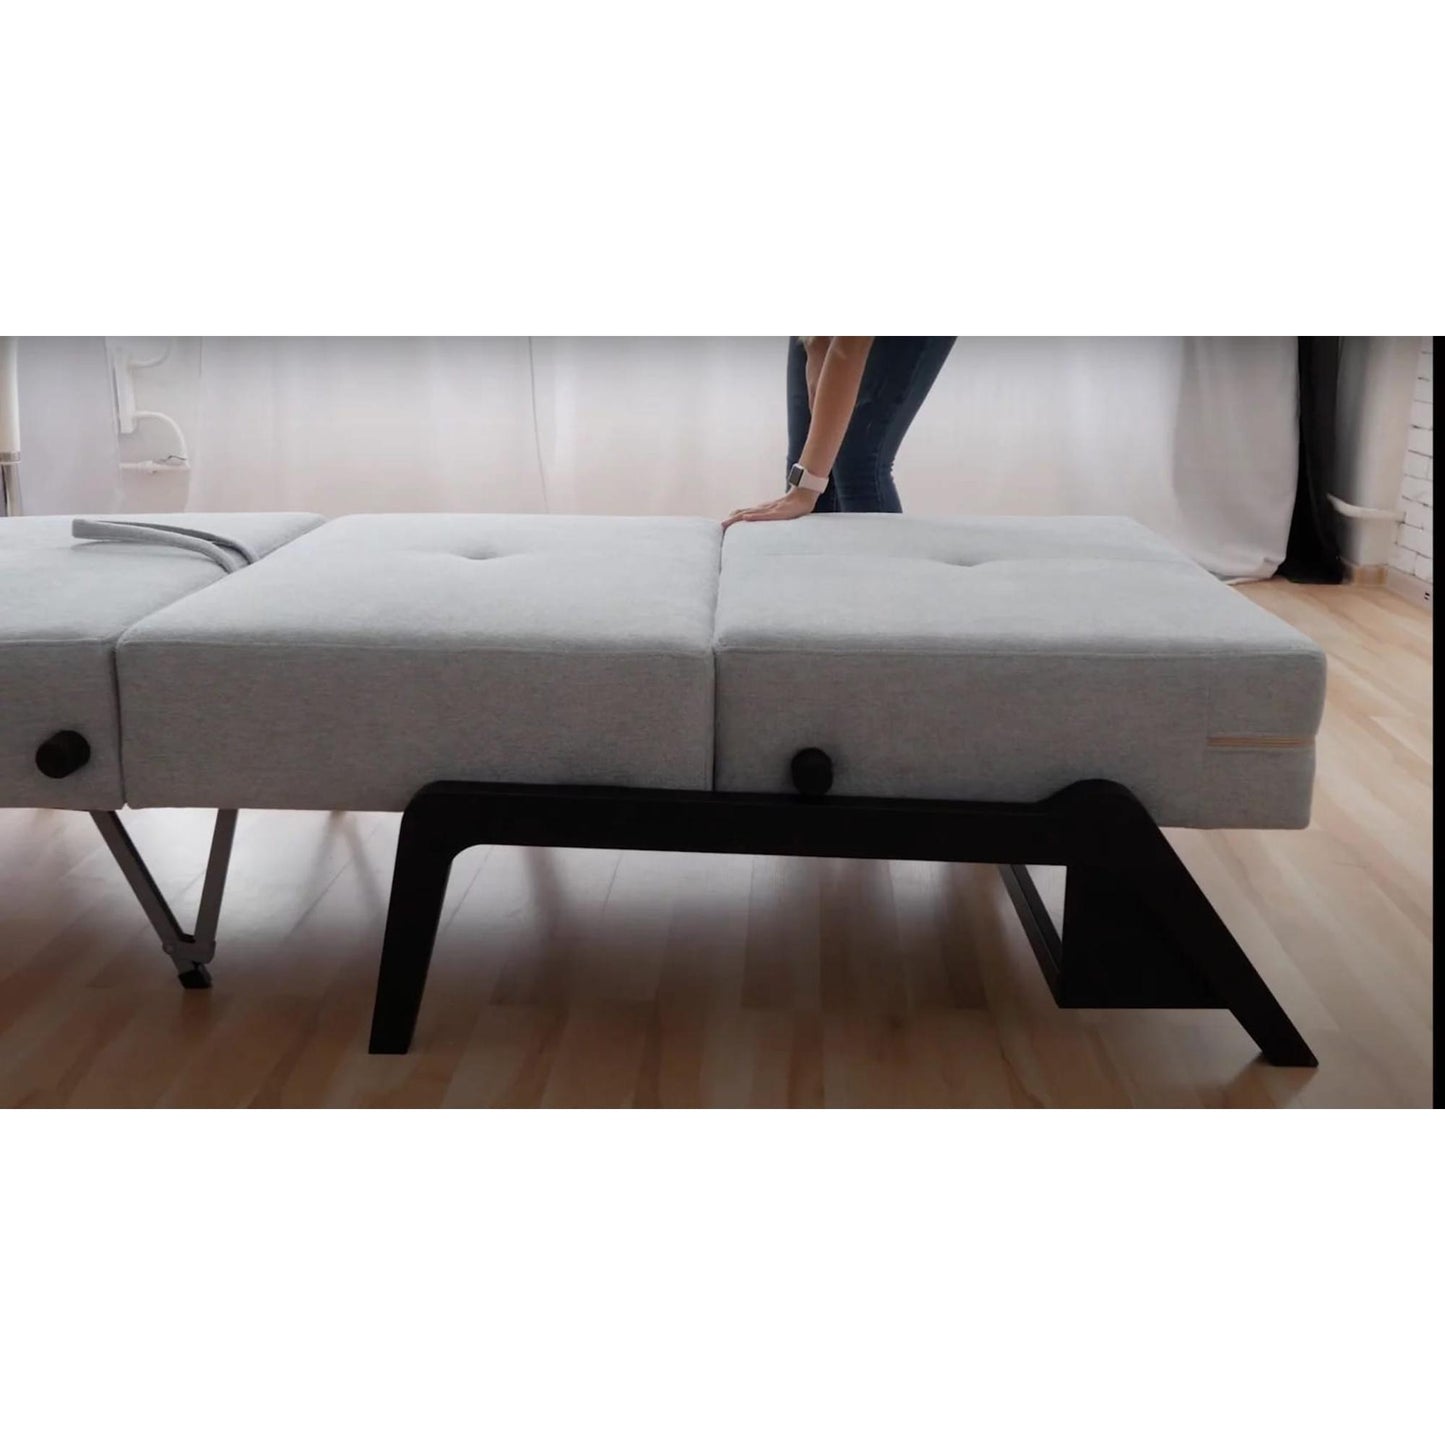 Flip Sofa Bed Small in Black